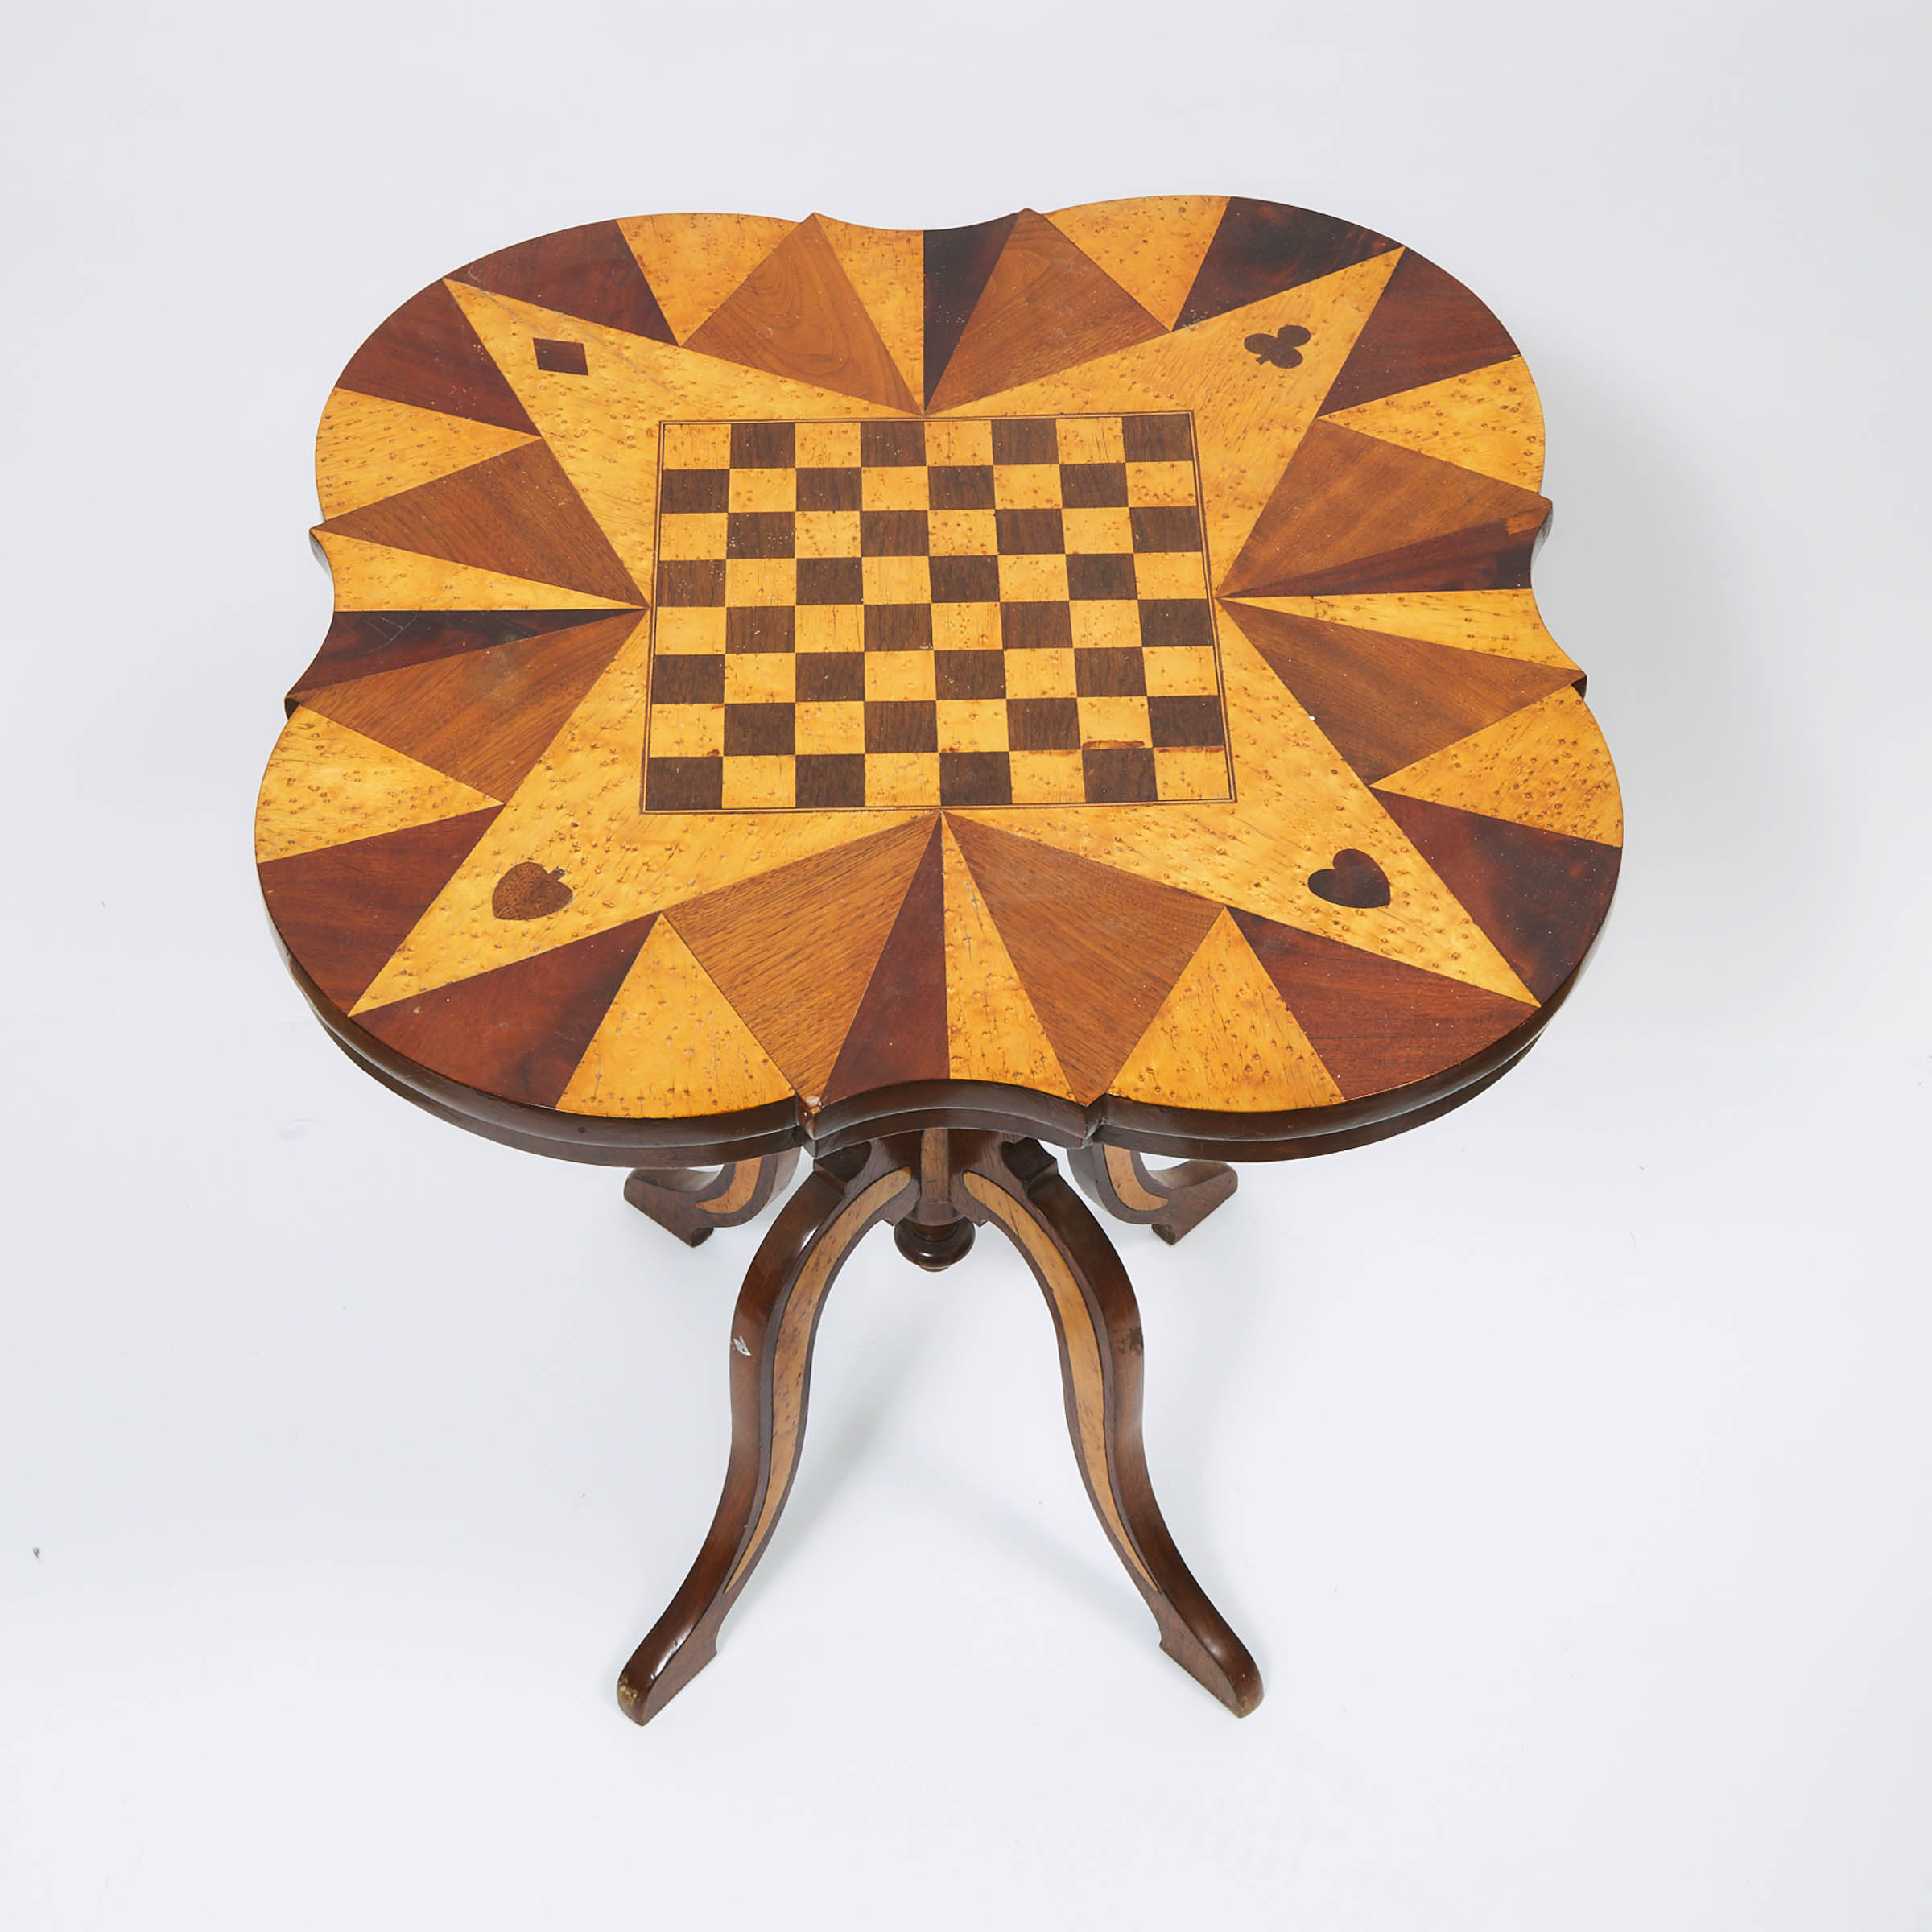 Ontario Bird's Eye Maple and Mahogany Games Table, Waterloo County, 1st half, 19th century